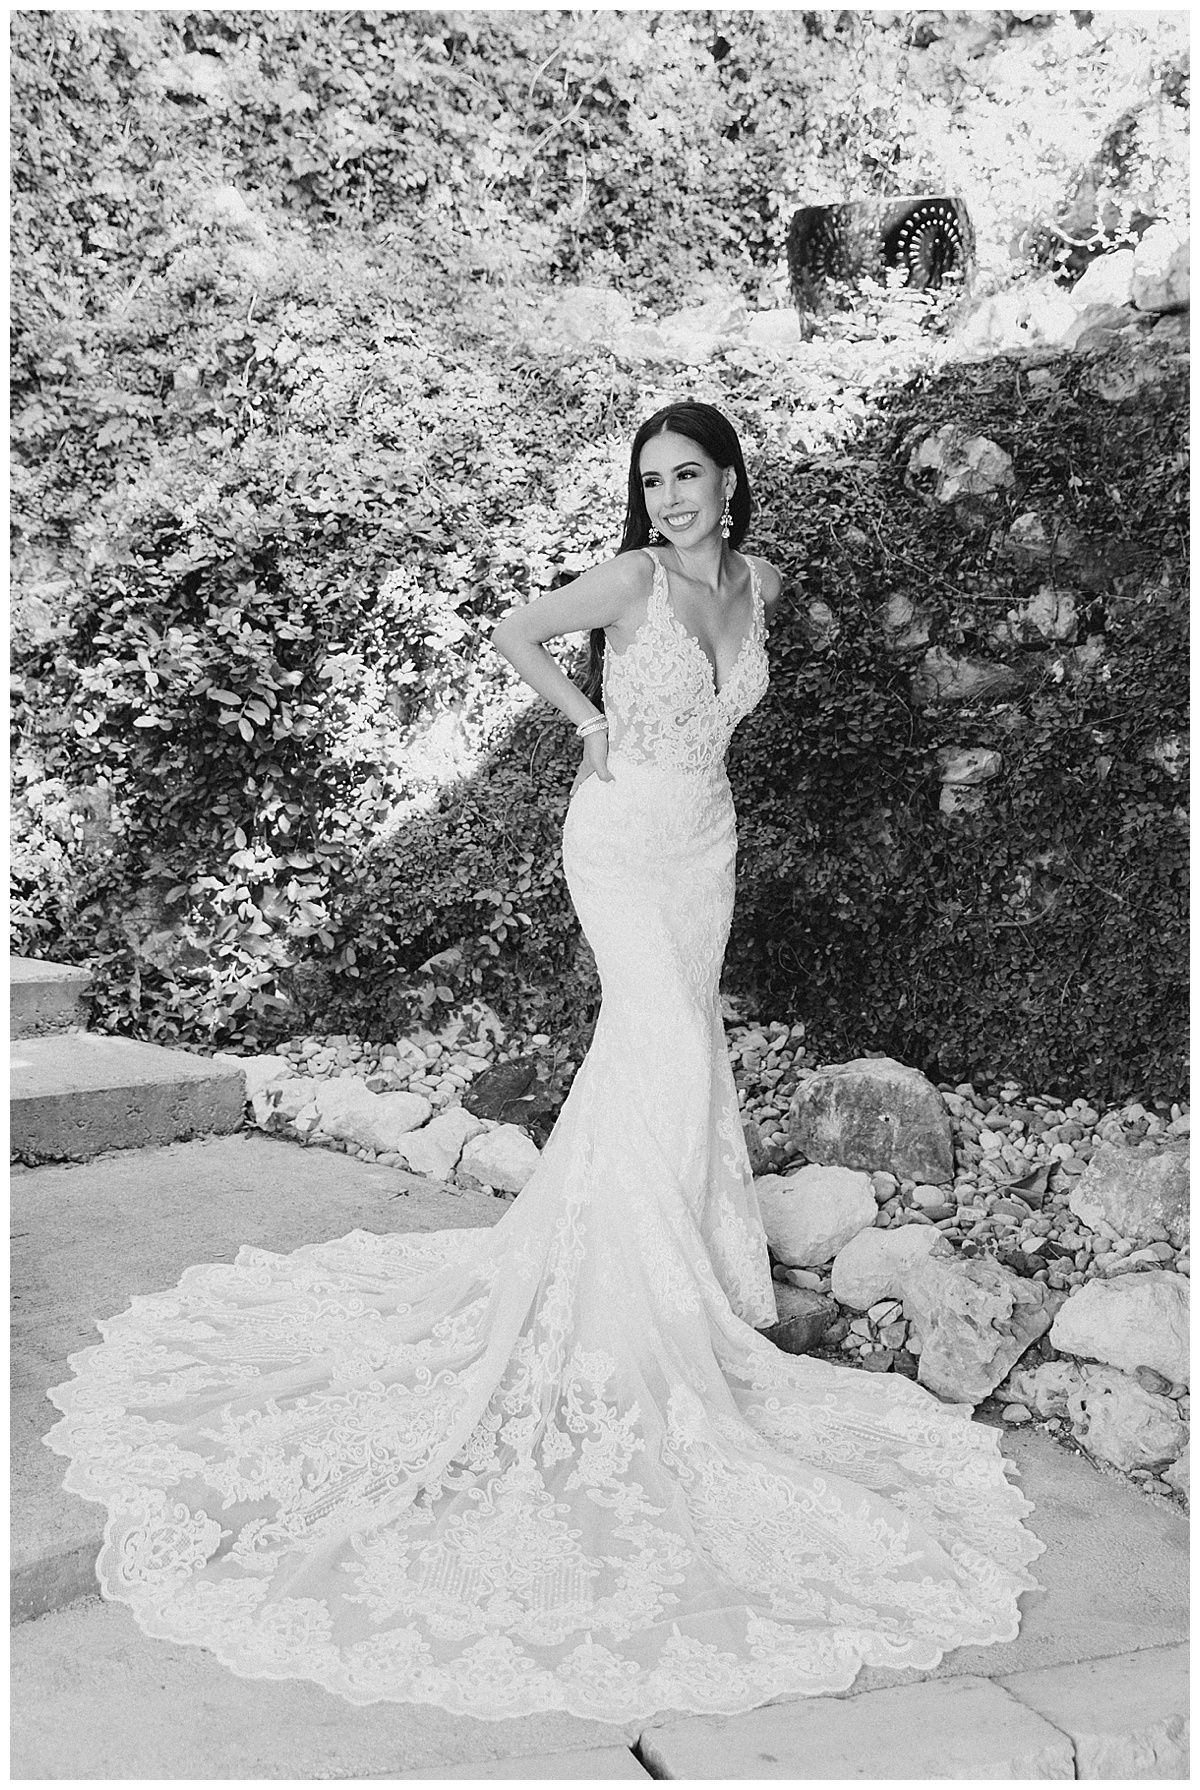 Black and white of bride smiling in wedding gown| Lacy wedding gown train| Villa Antonia wedding venue| Austin, TX photographer| www.monicaroberts.com